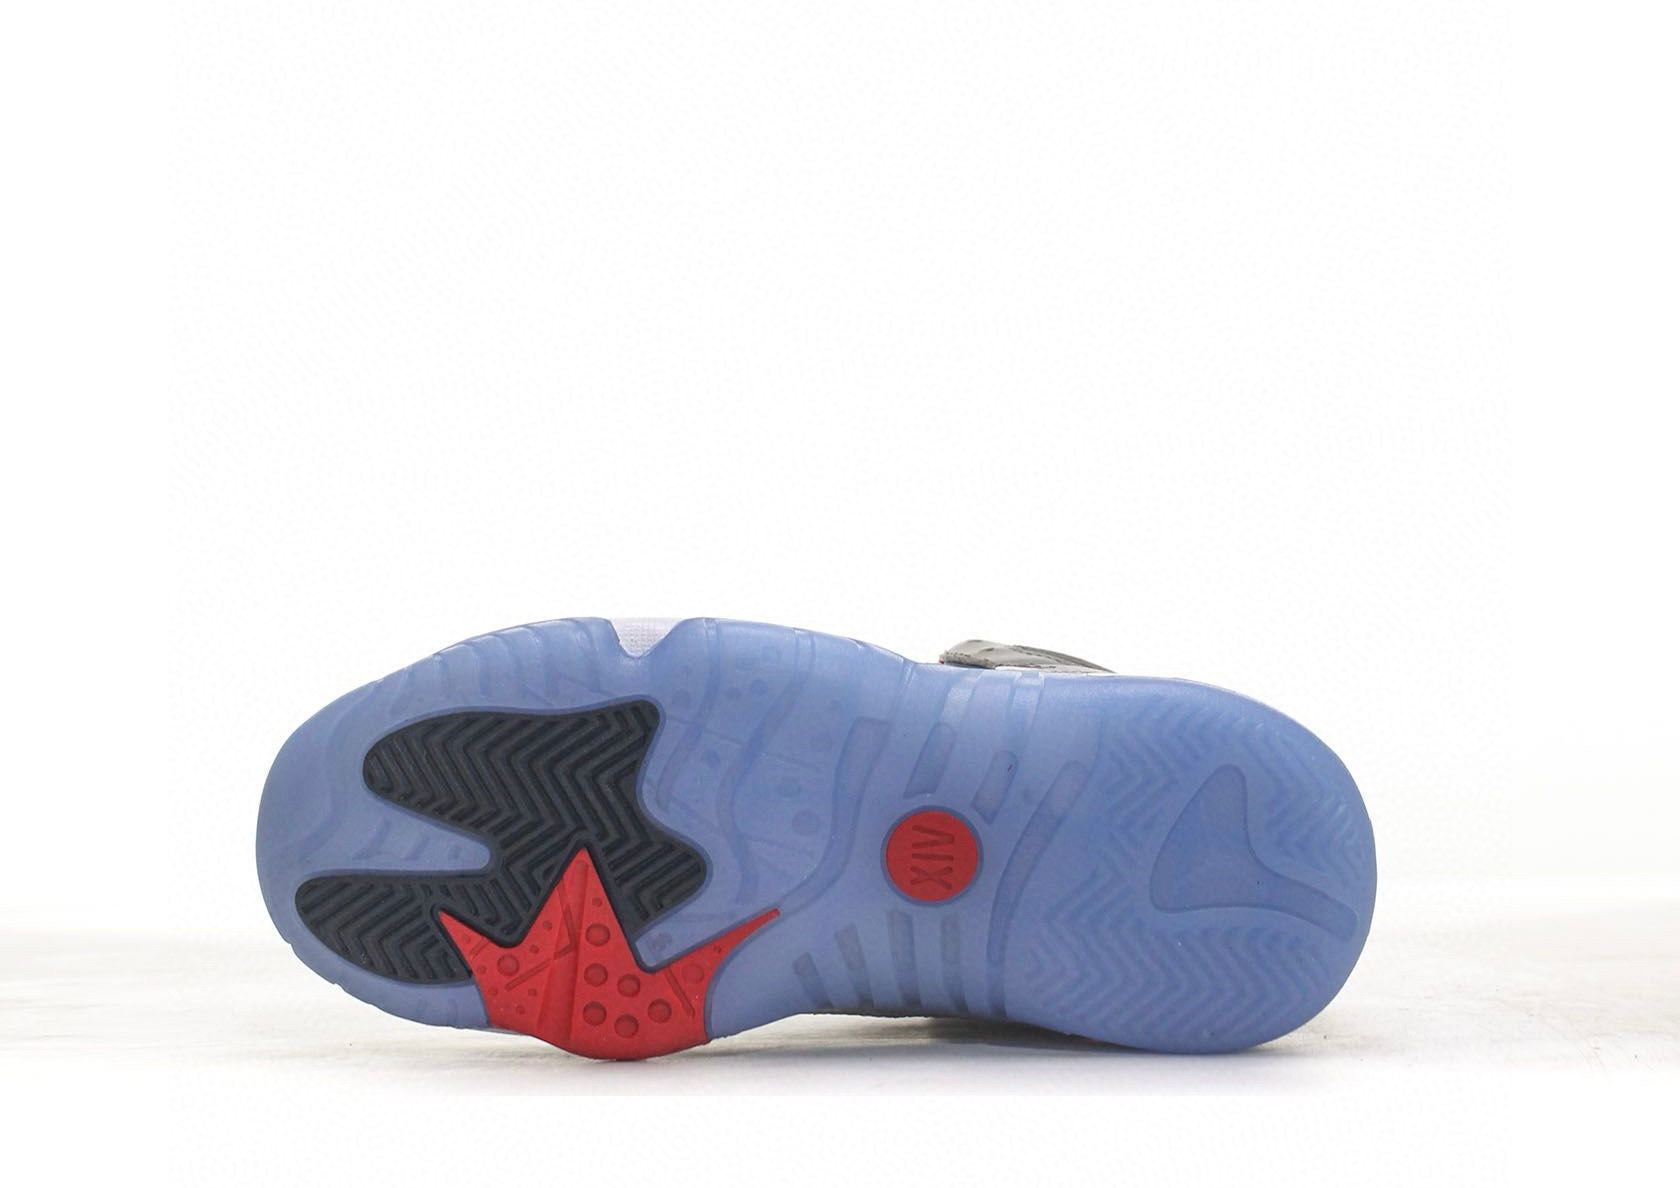 Nike air jordan rétro chaussures grises